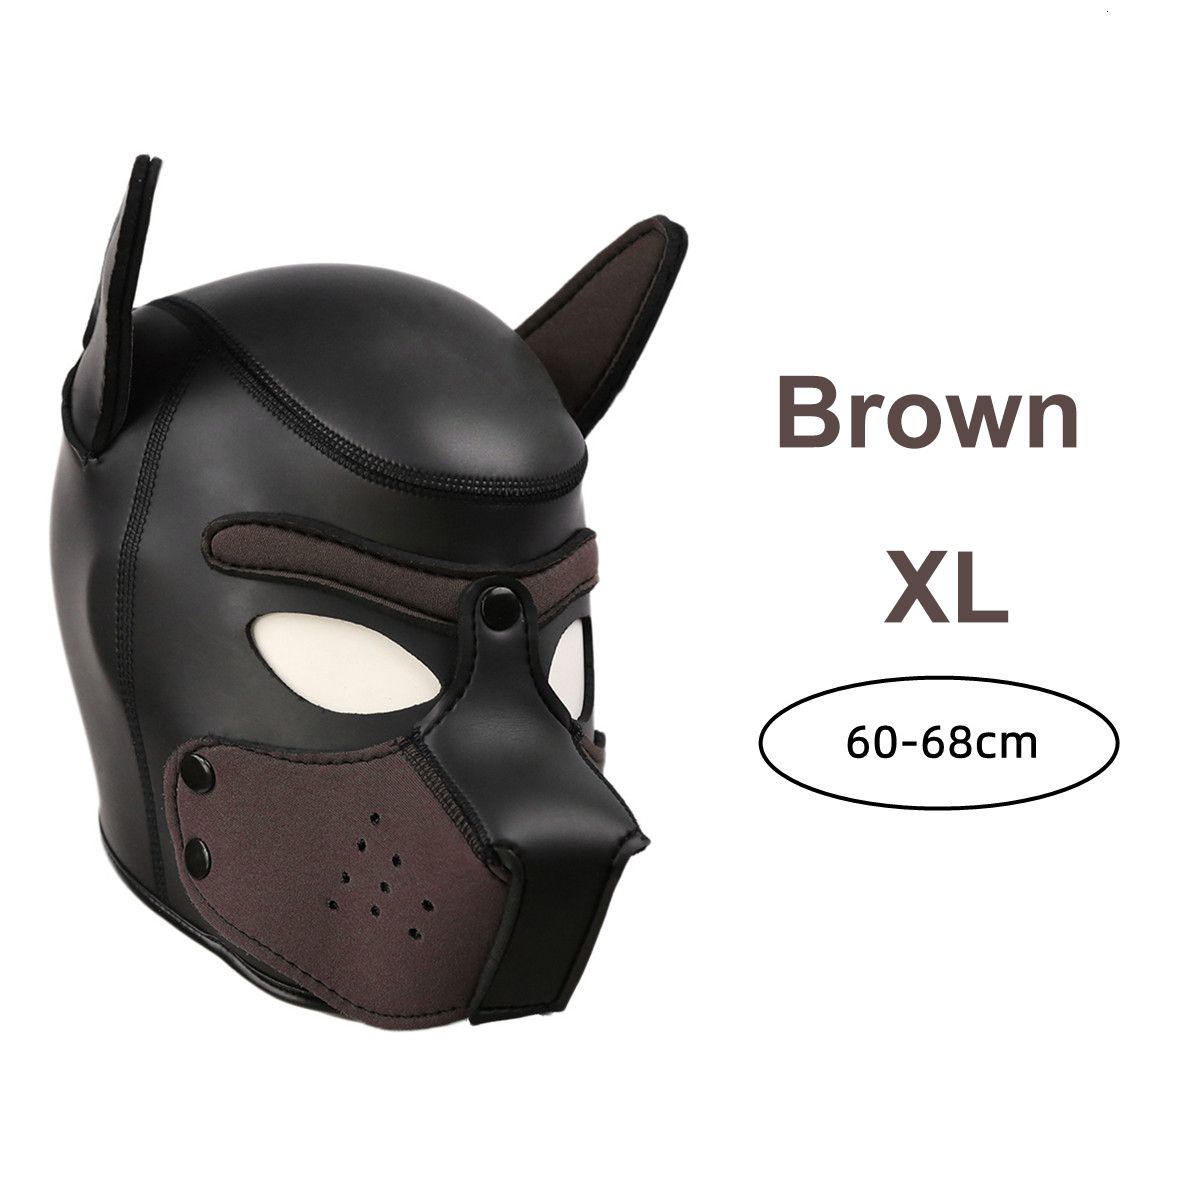 Brown XL